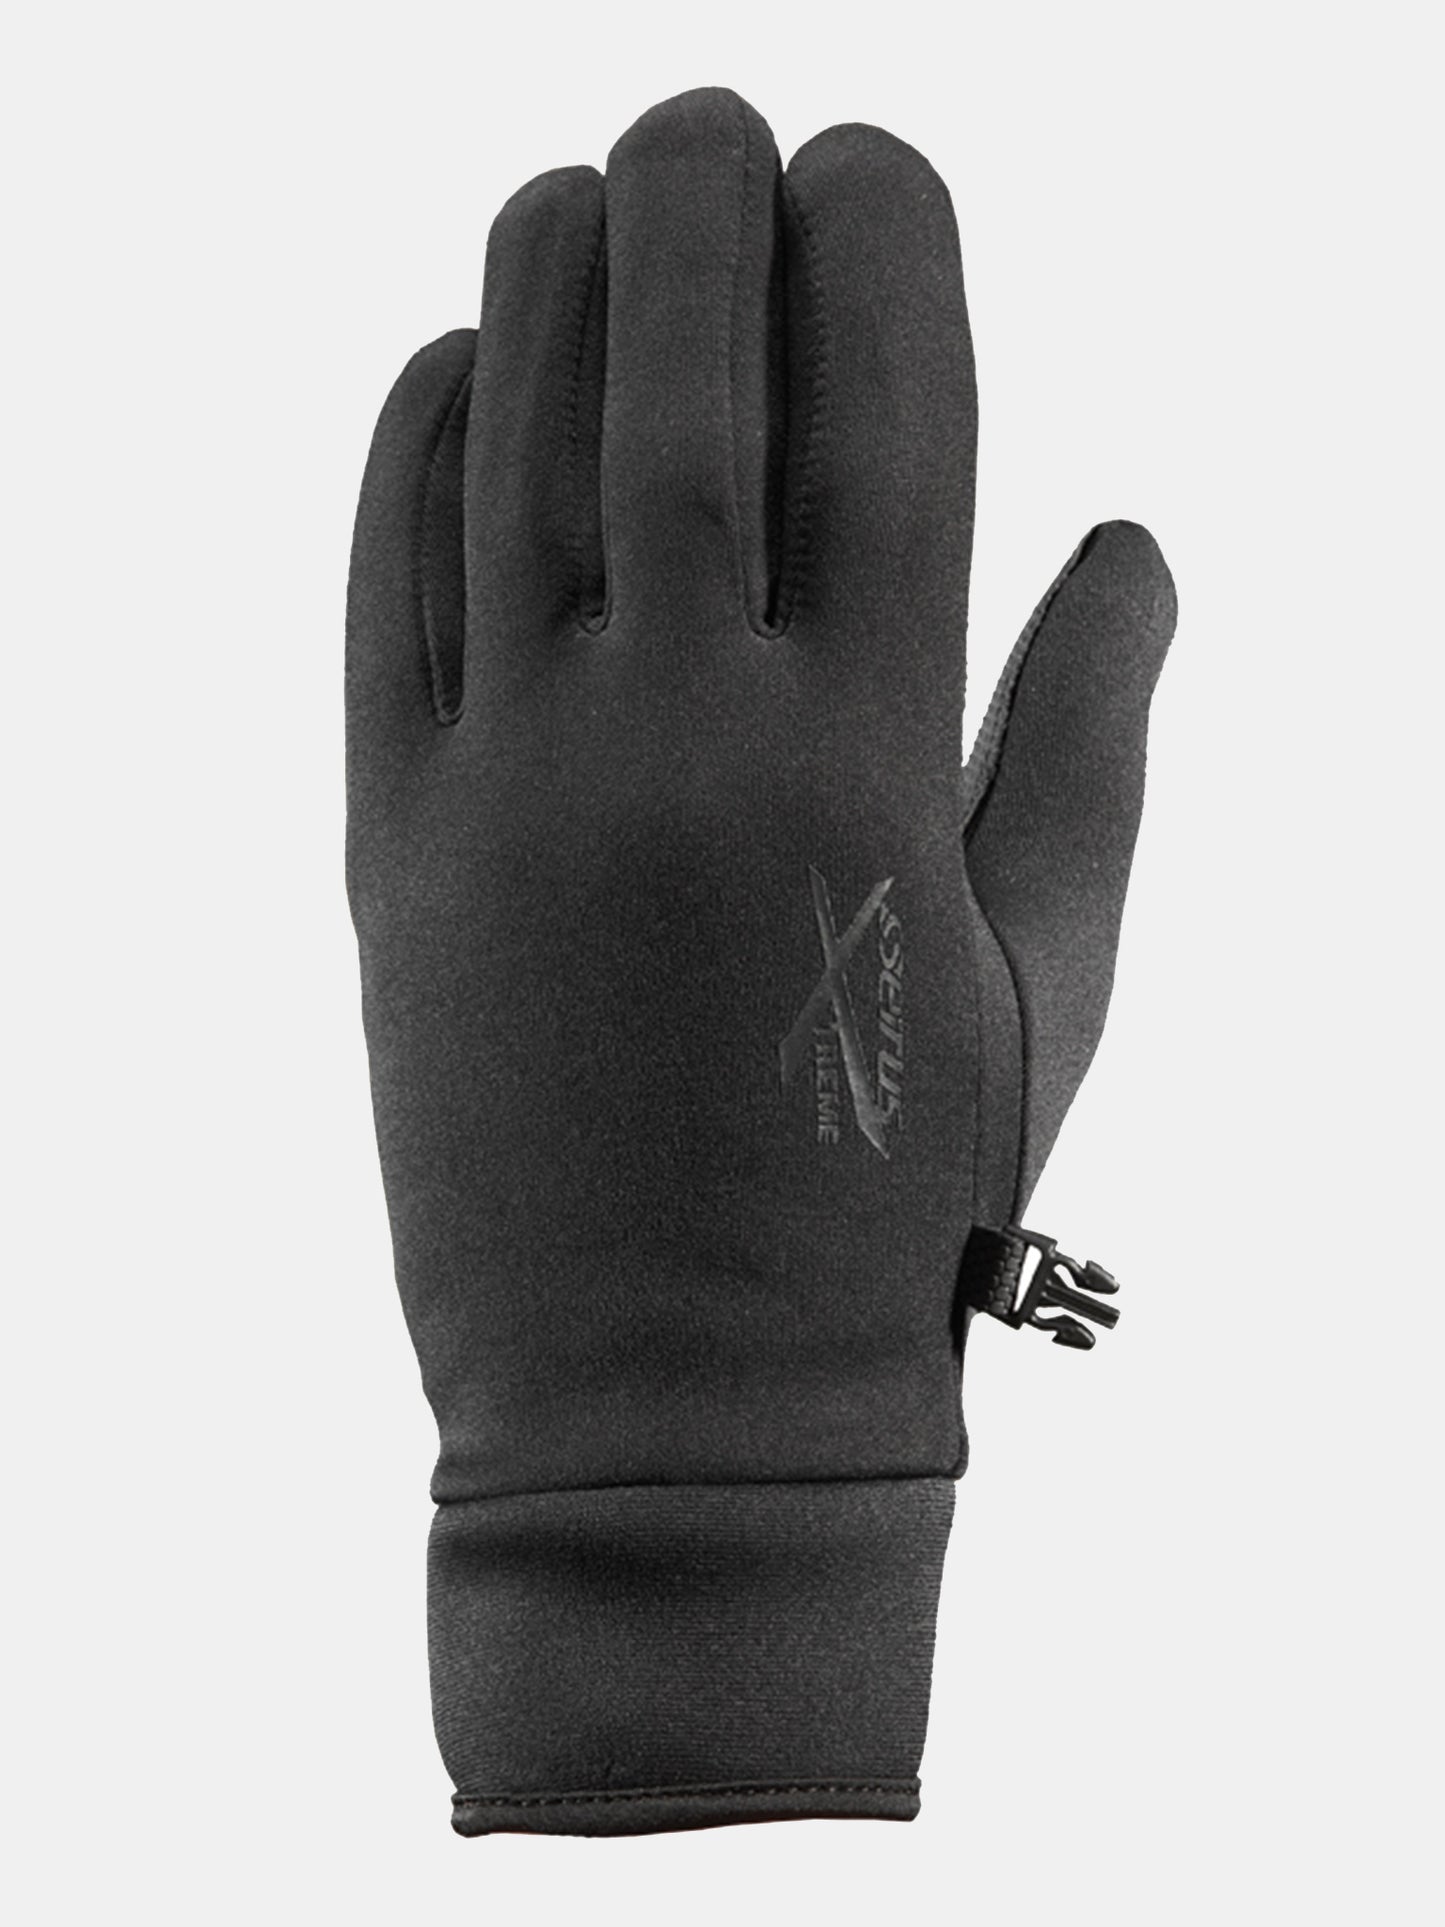 Seirus Men's Xtreme™ All Weather™ Glove